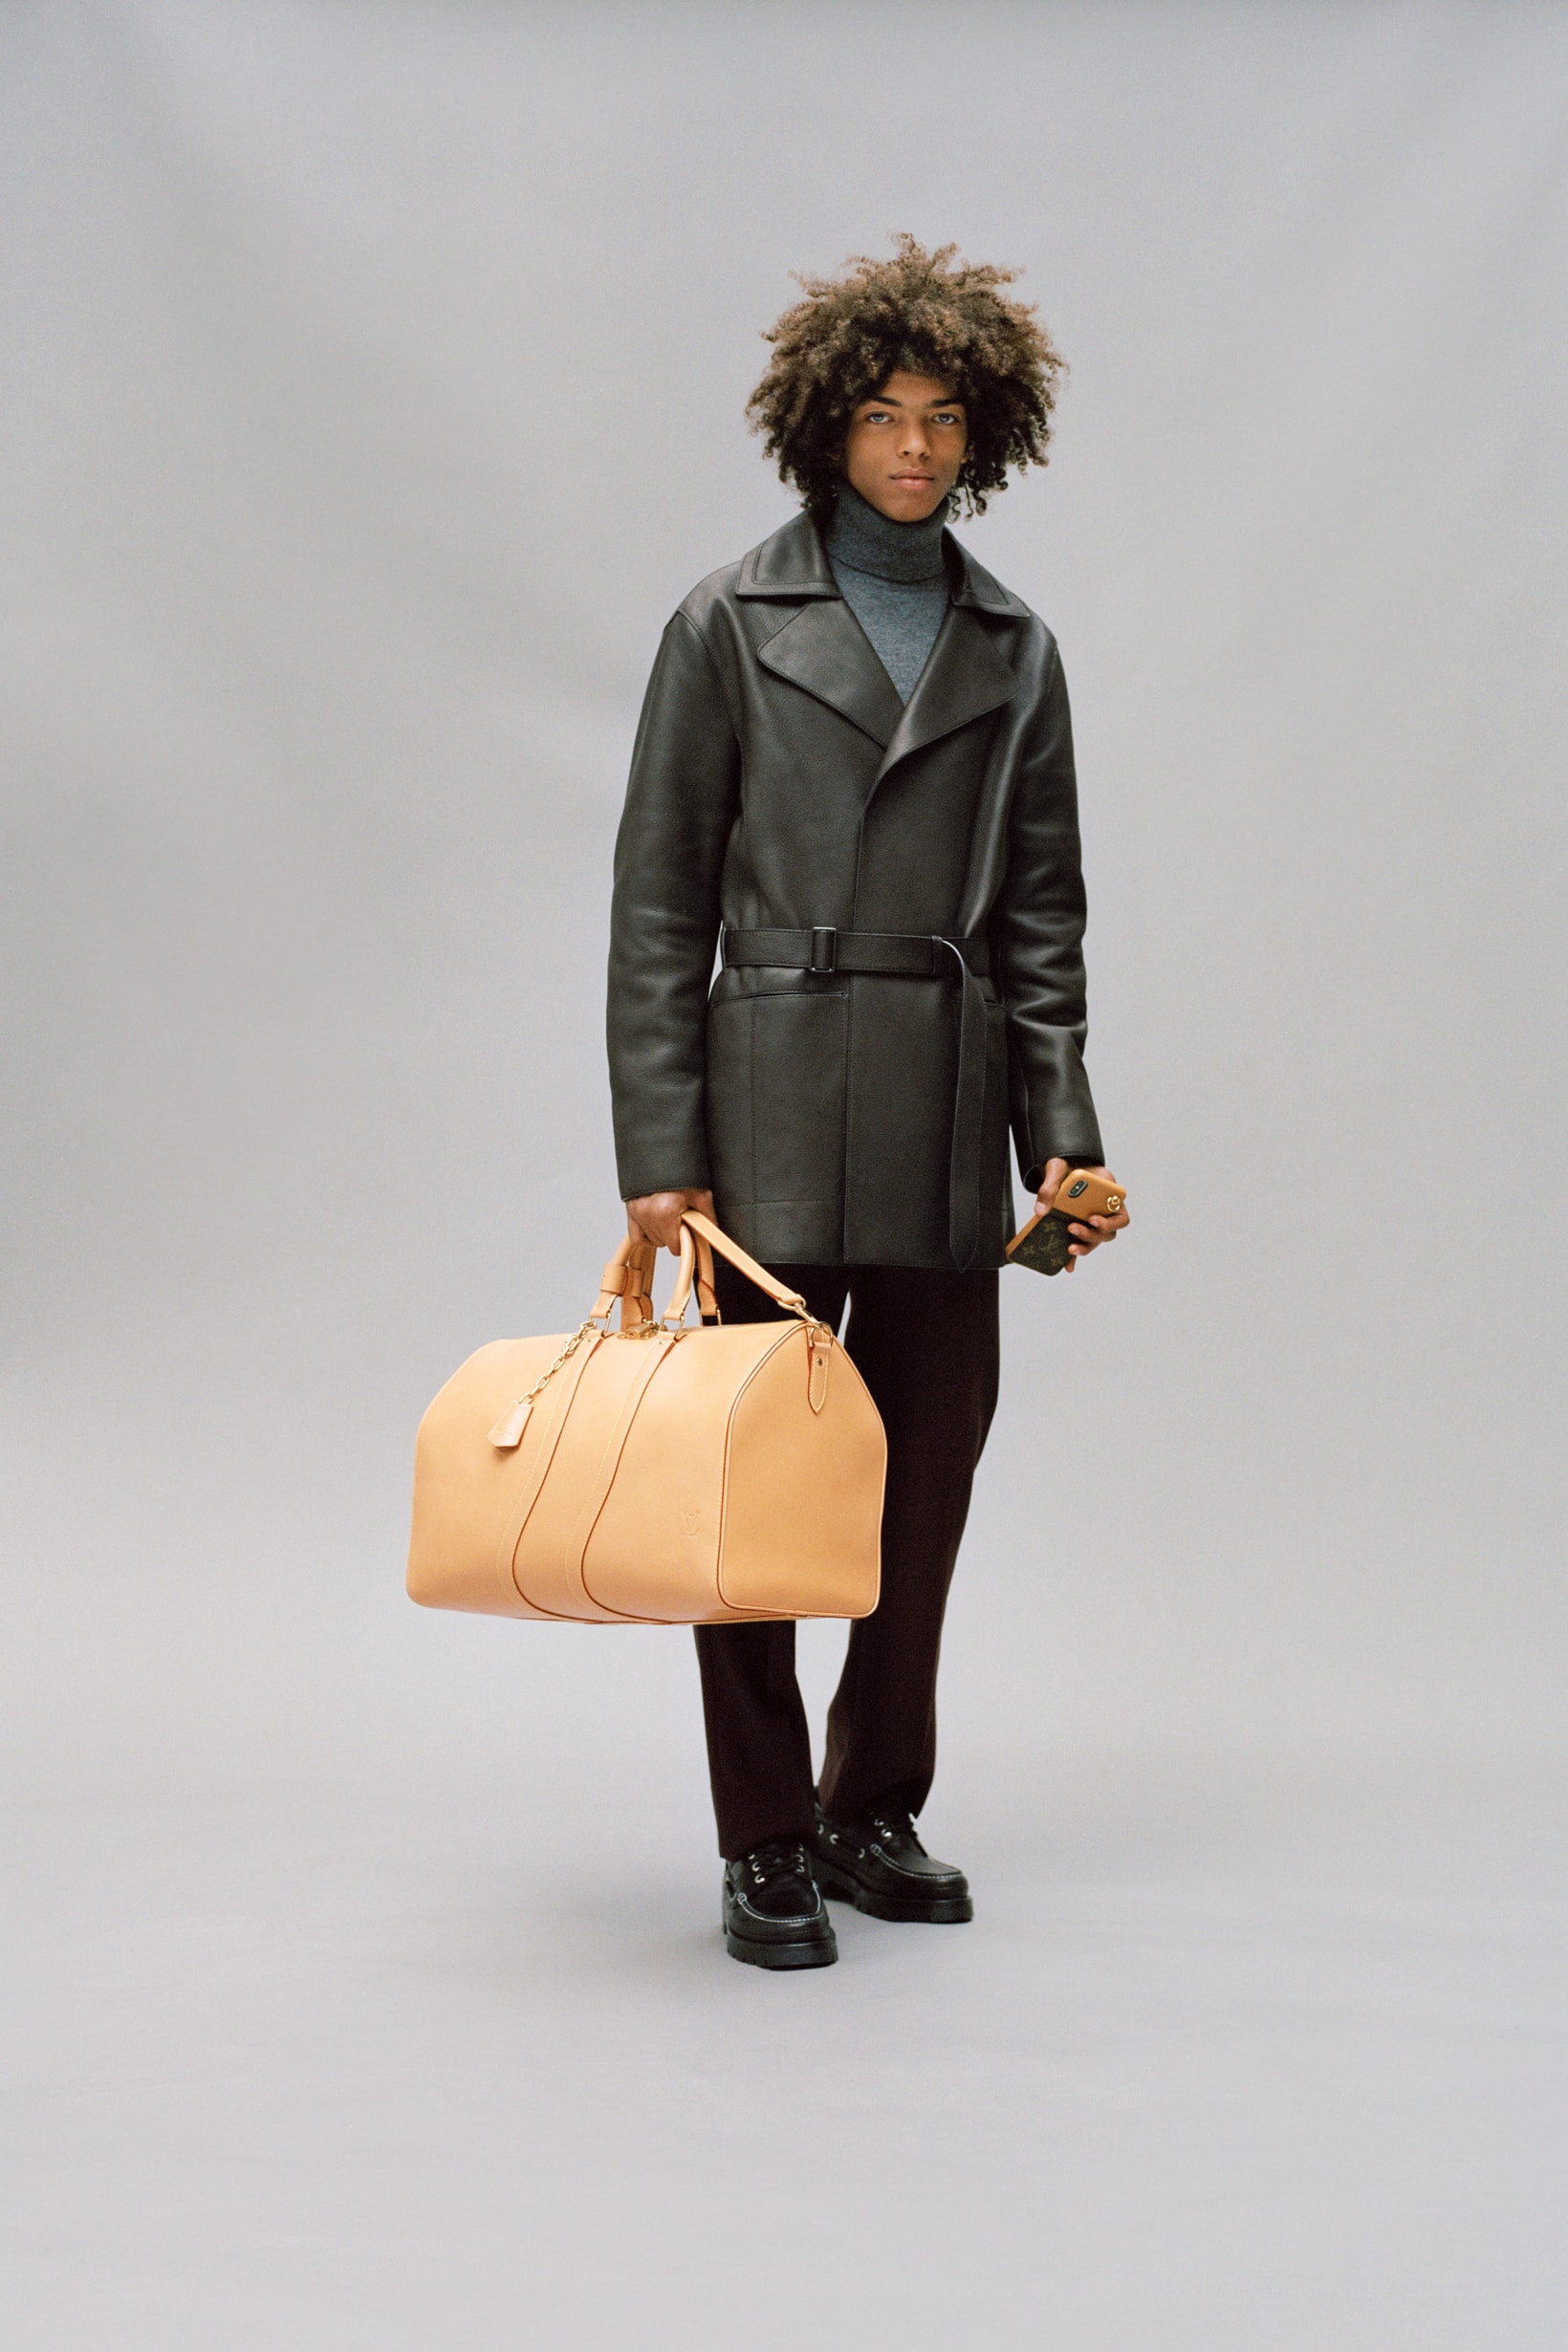 Louis Vuitton Men's Pre-Spring 2020 Lookbook Jacket Green Pants Black Bag Tan